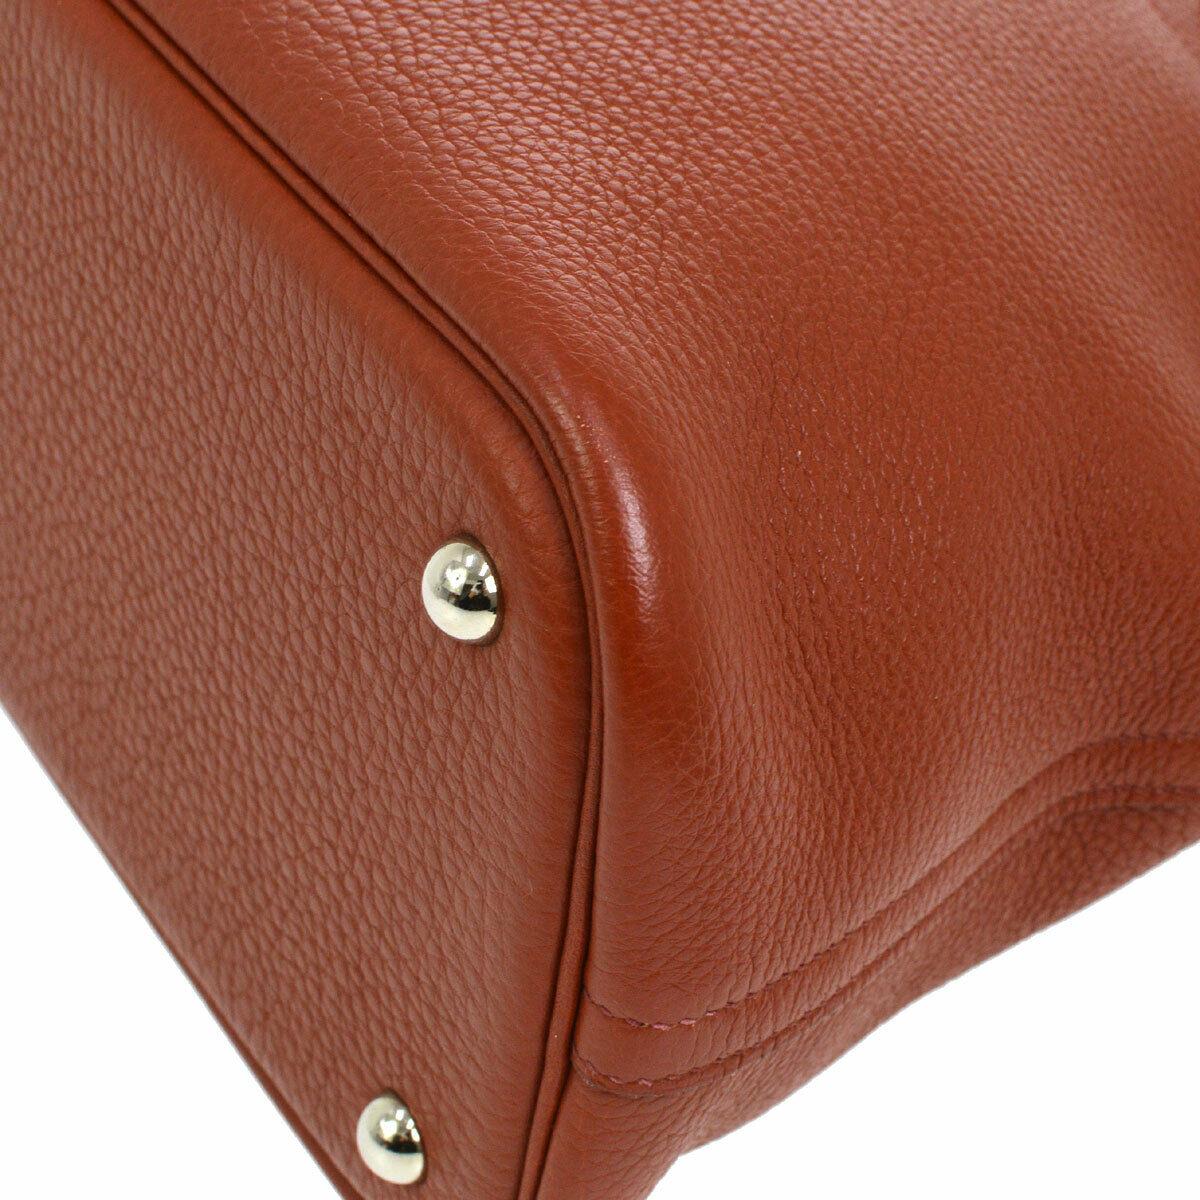 Women's Hermes Leather Carryall Top Handle Satchel Tote Bag